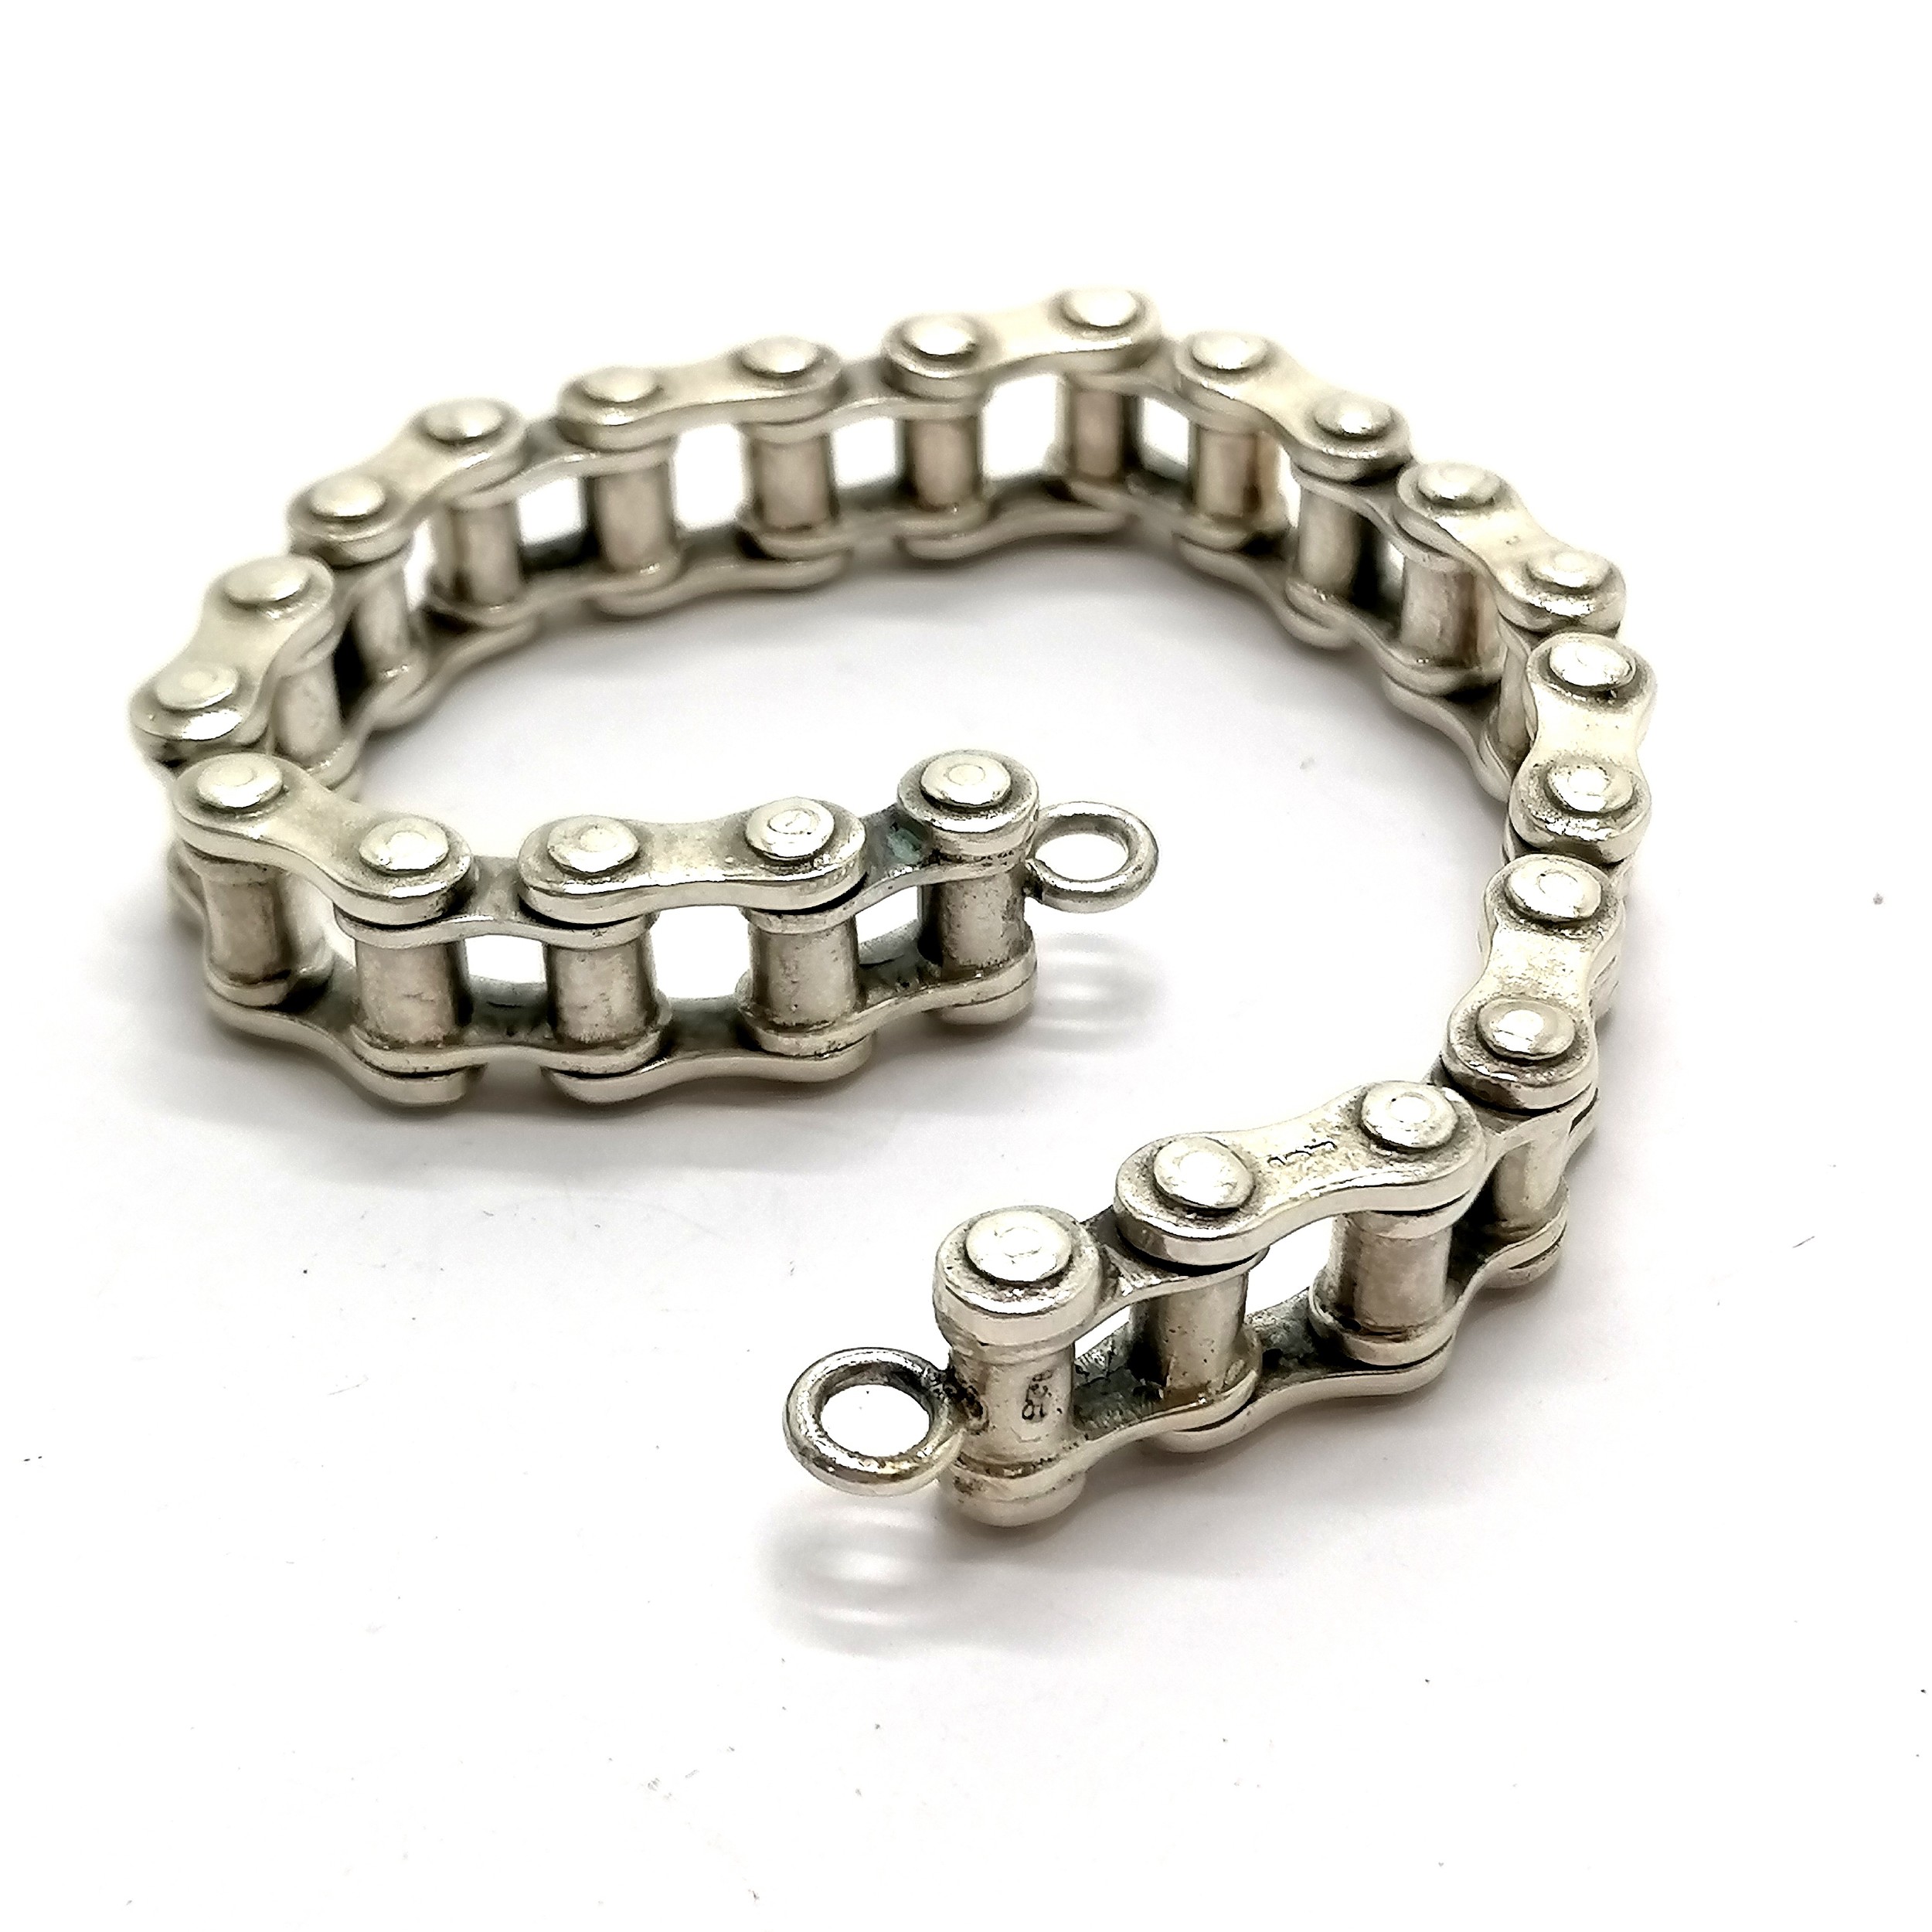 Silver marked bike chain bracelet (lacks clasp) - 21cm long & 62g